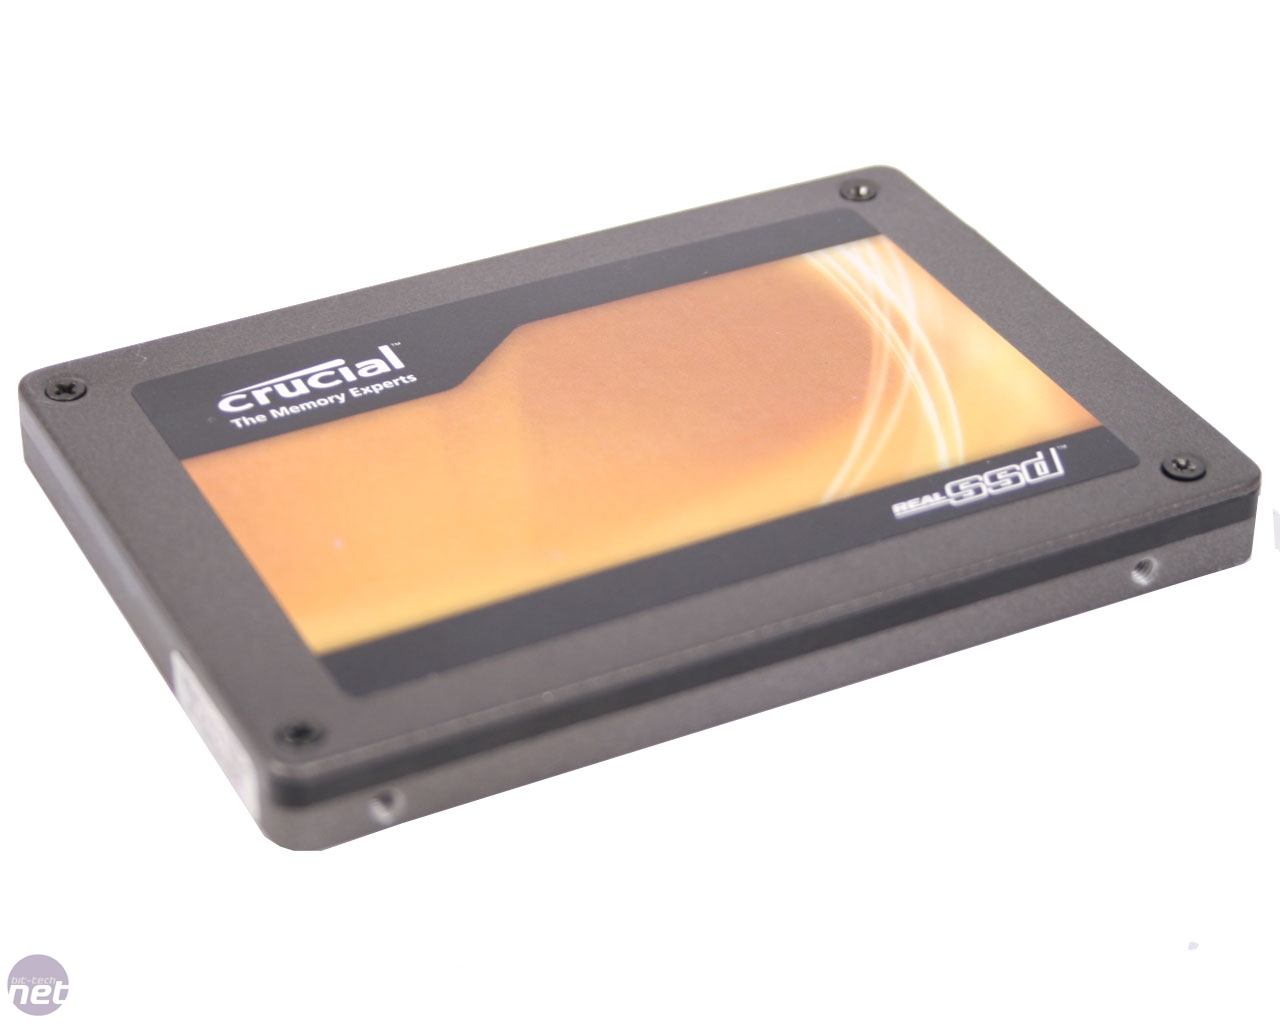 Crucial RealSSD C300 SSD Review | bit-tech.net